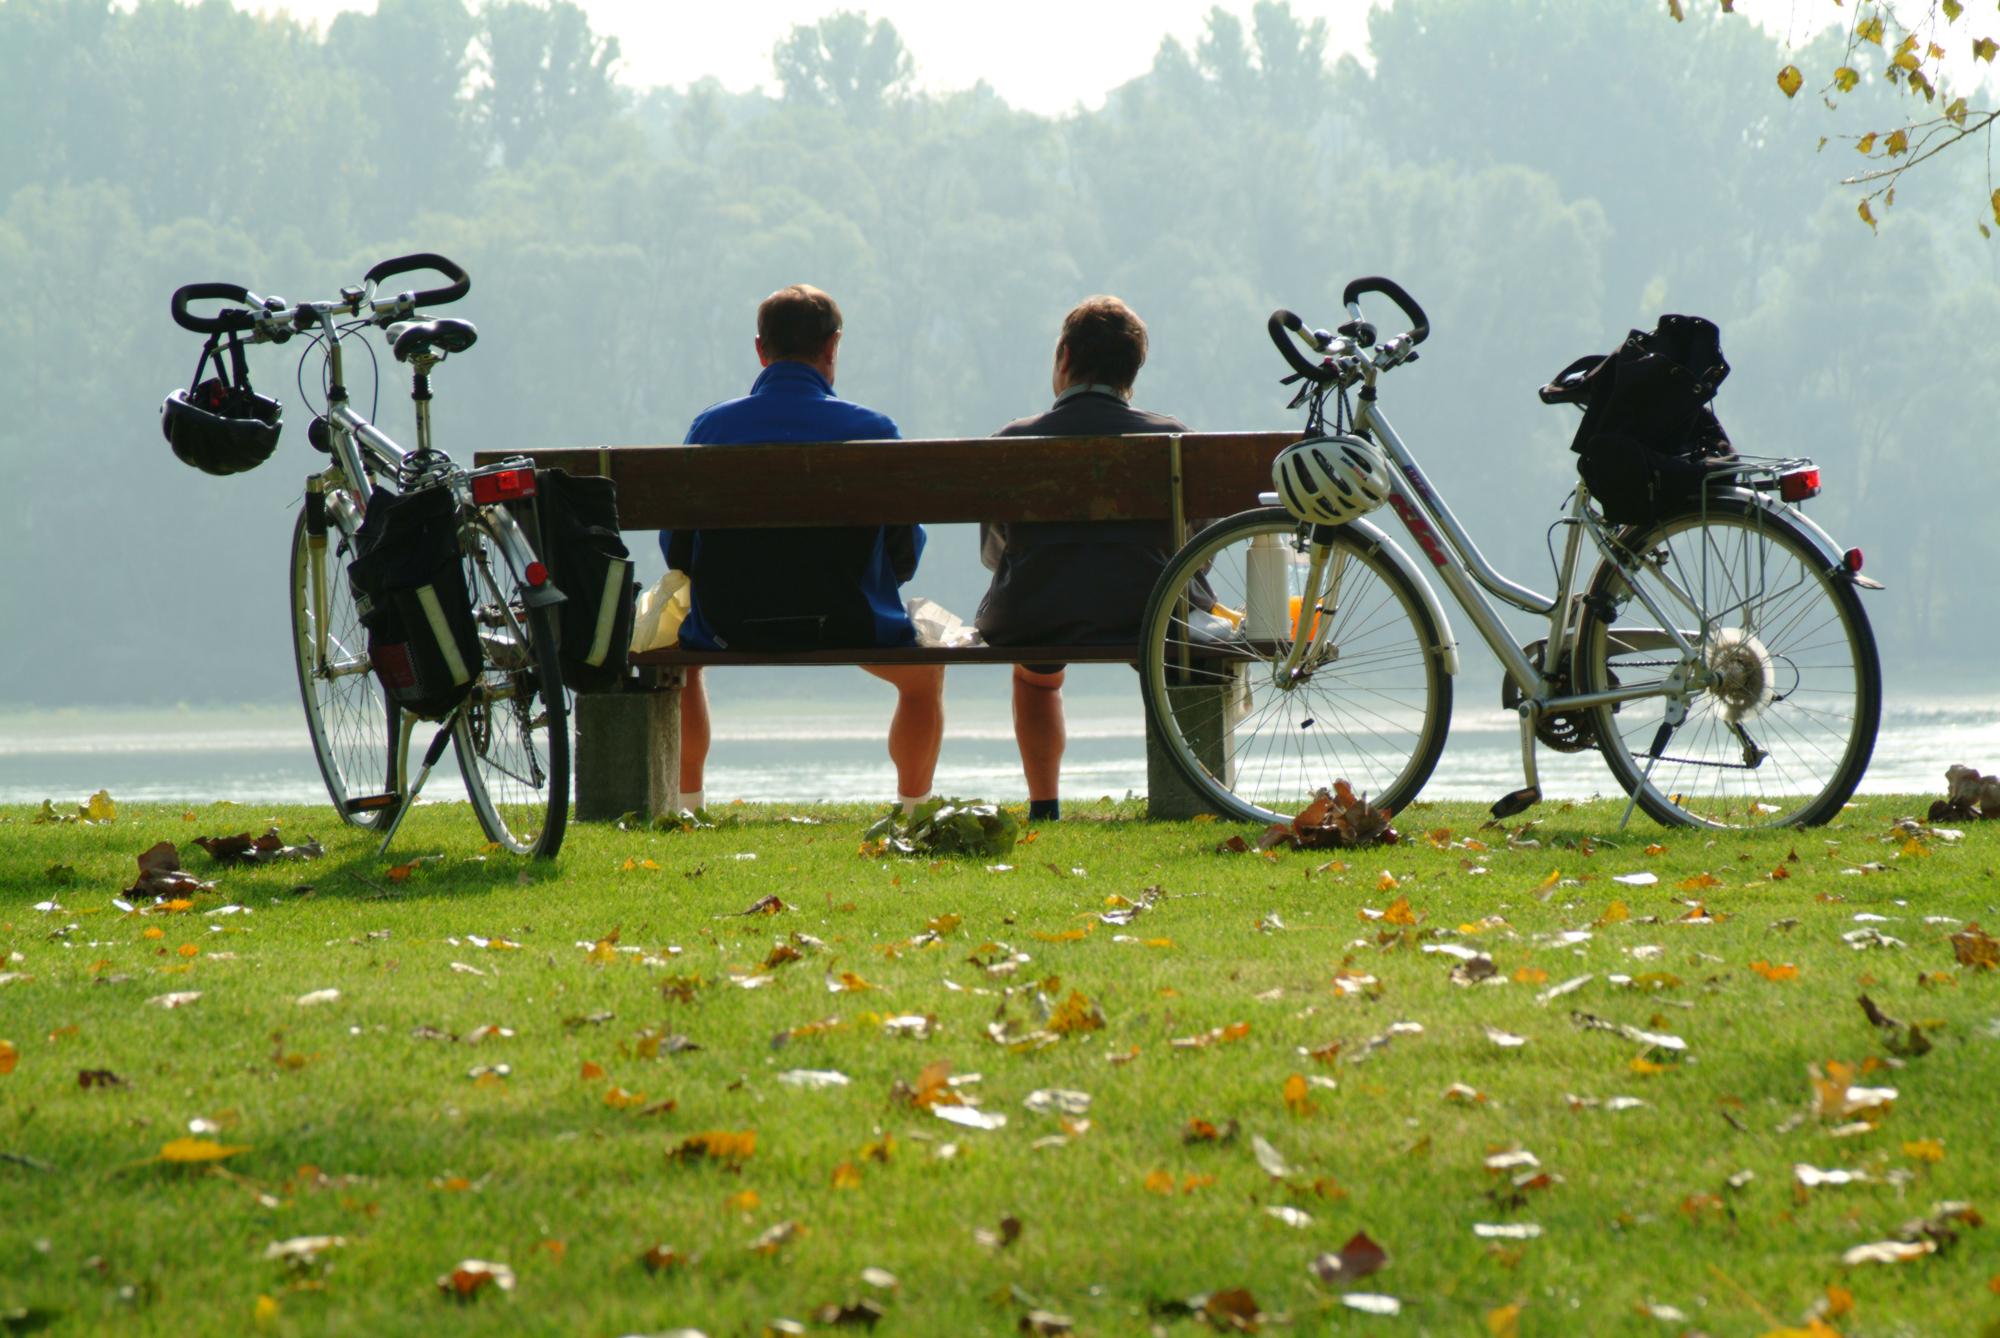 Many idyllic places along the bike bath invite you to take a break, enjoy and relax. – © Steve Haider, Donau NÖ